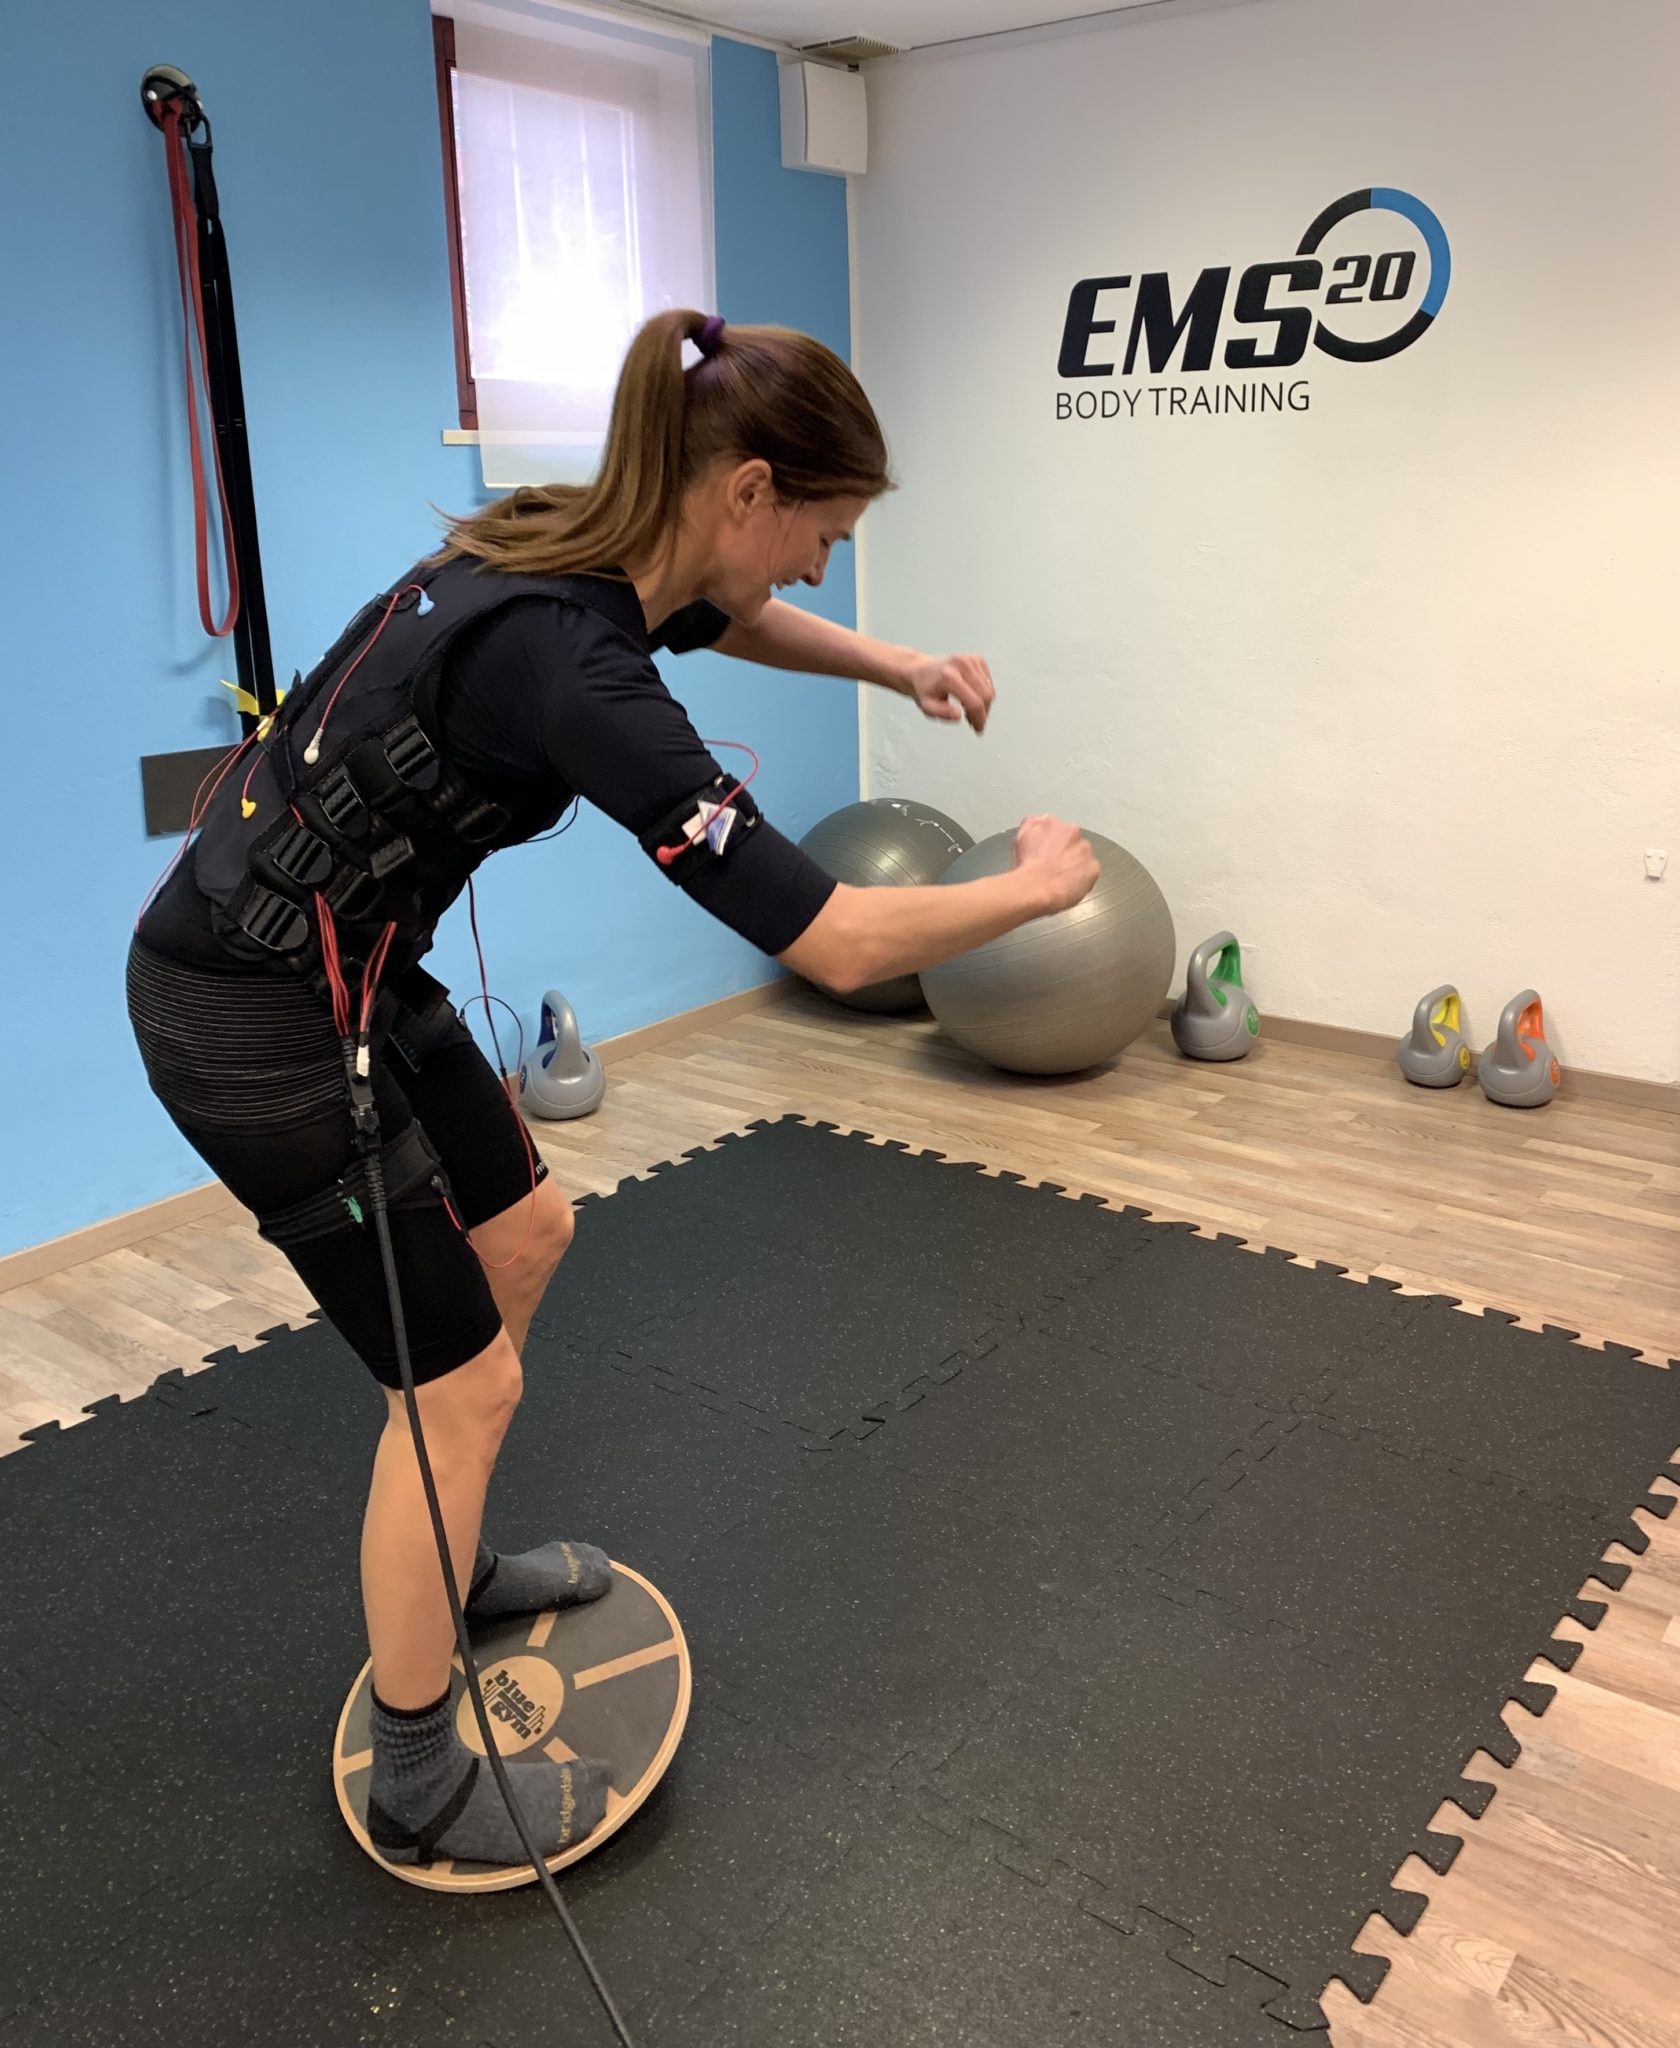 Doing a bodytech workout with EMS 20 Training, Slovenia, Ljubljana